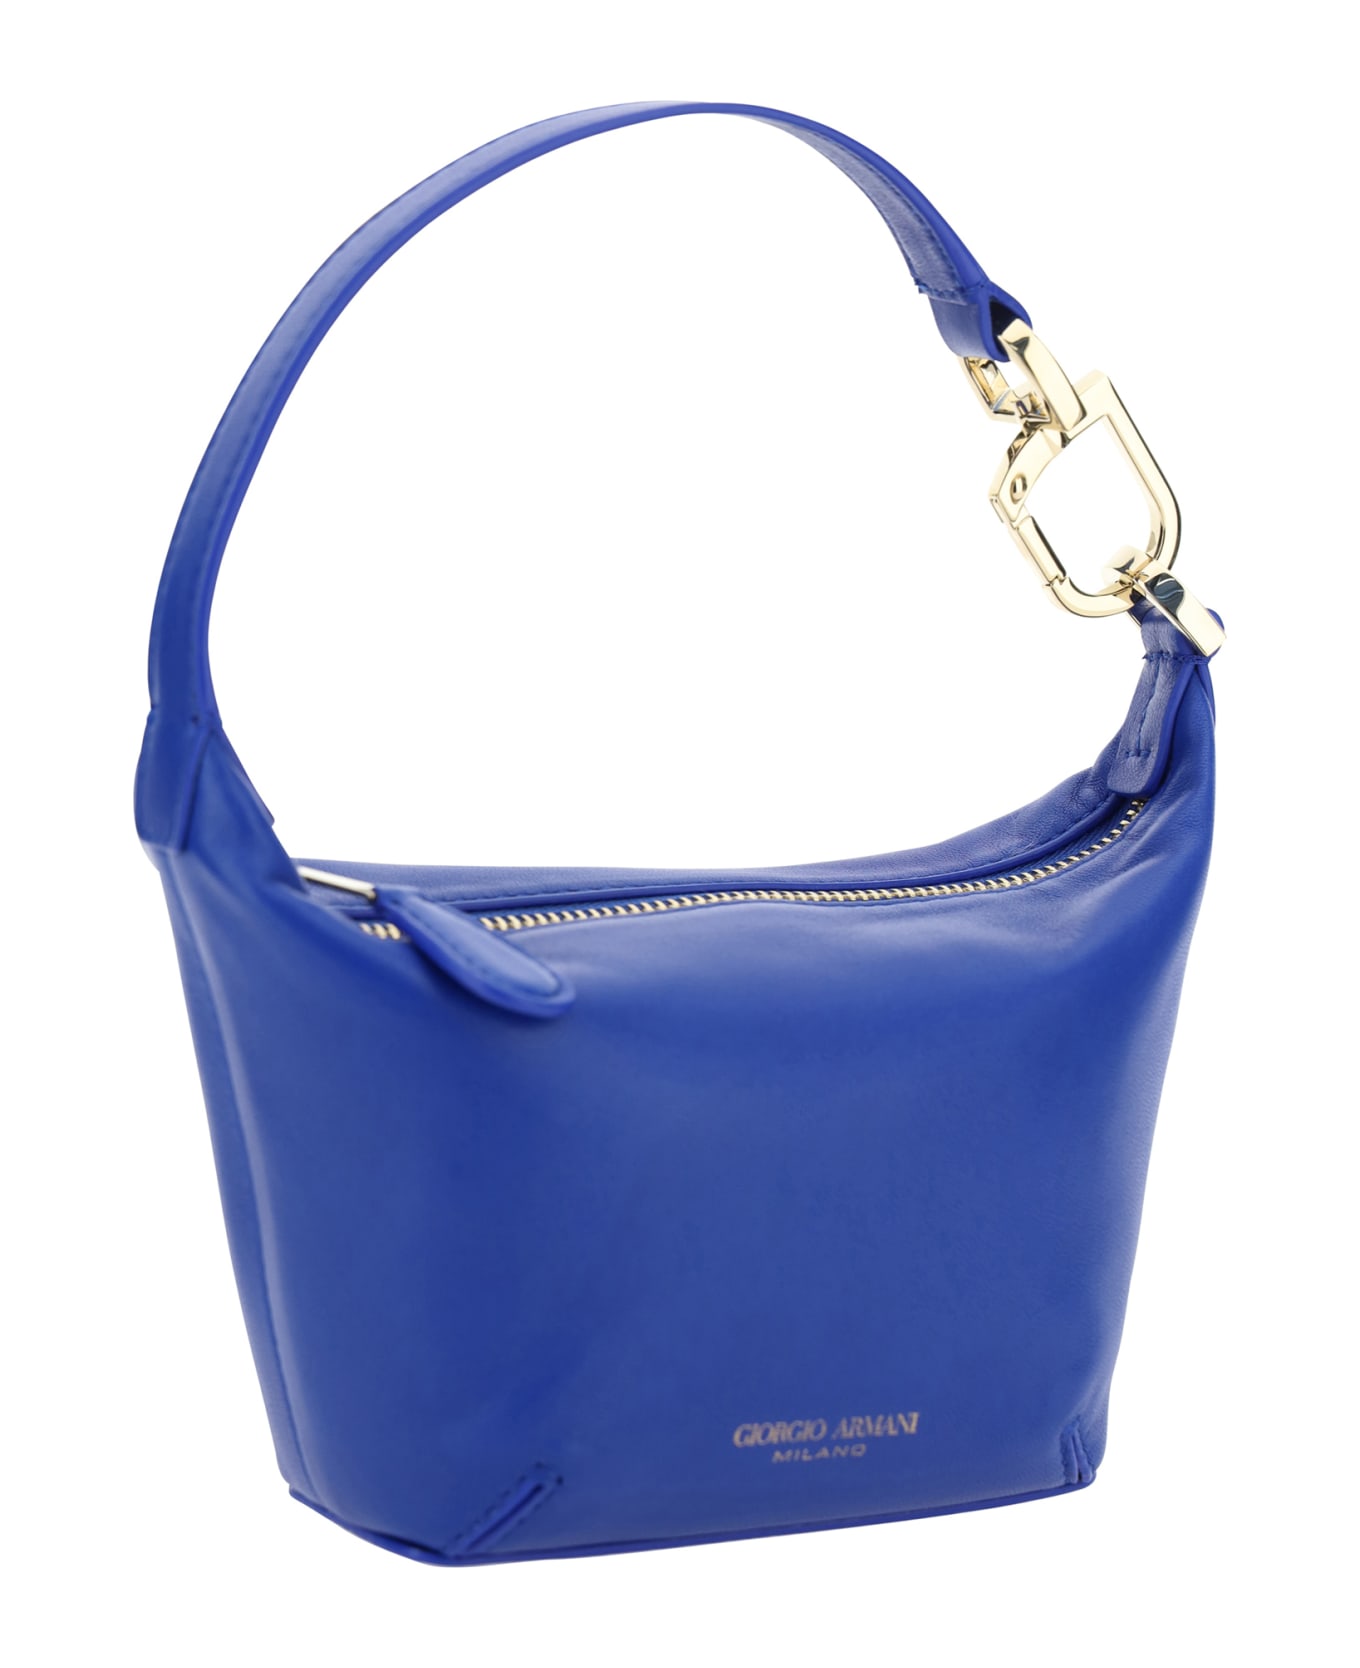 Giorgio Armani Green Mini Shoulder Bag - Blu China